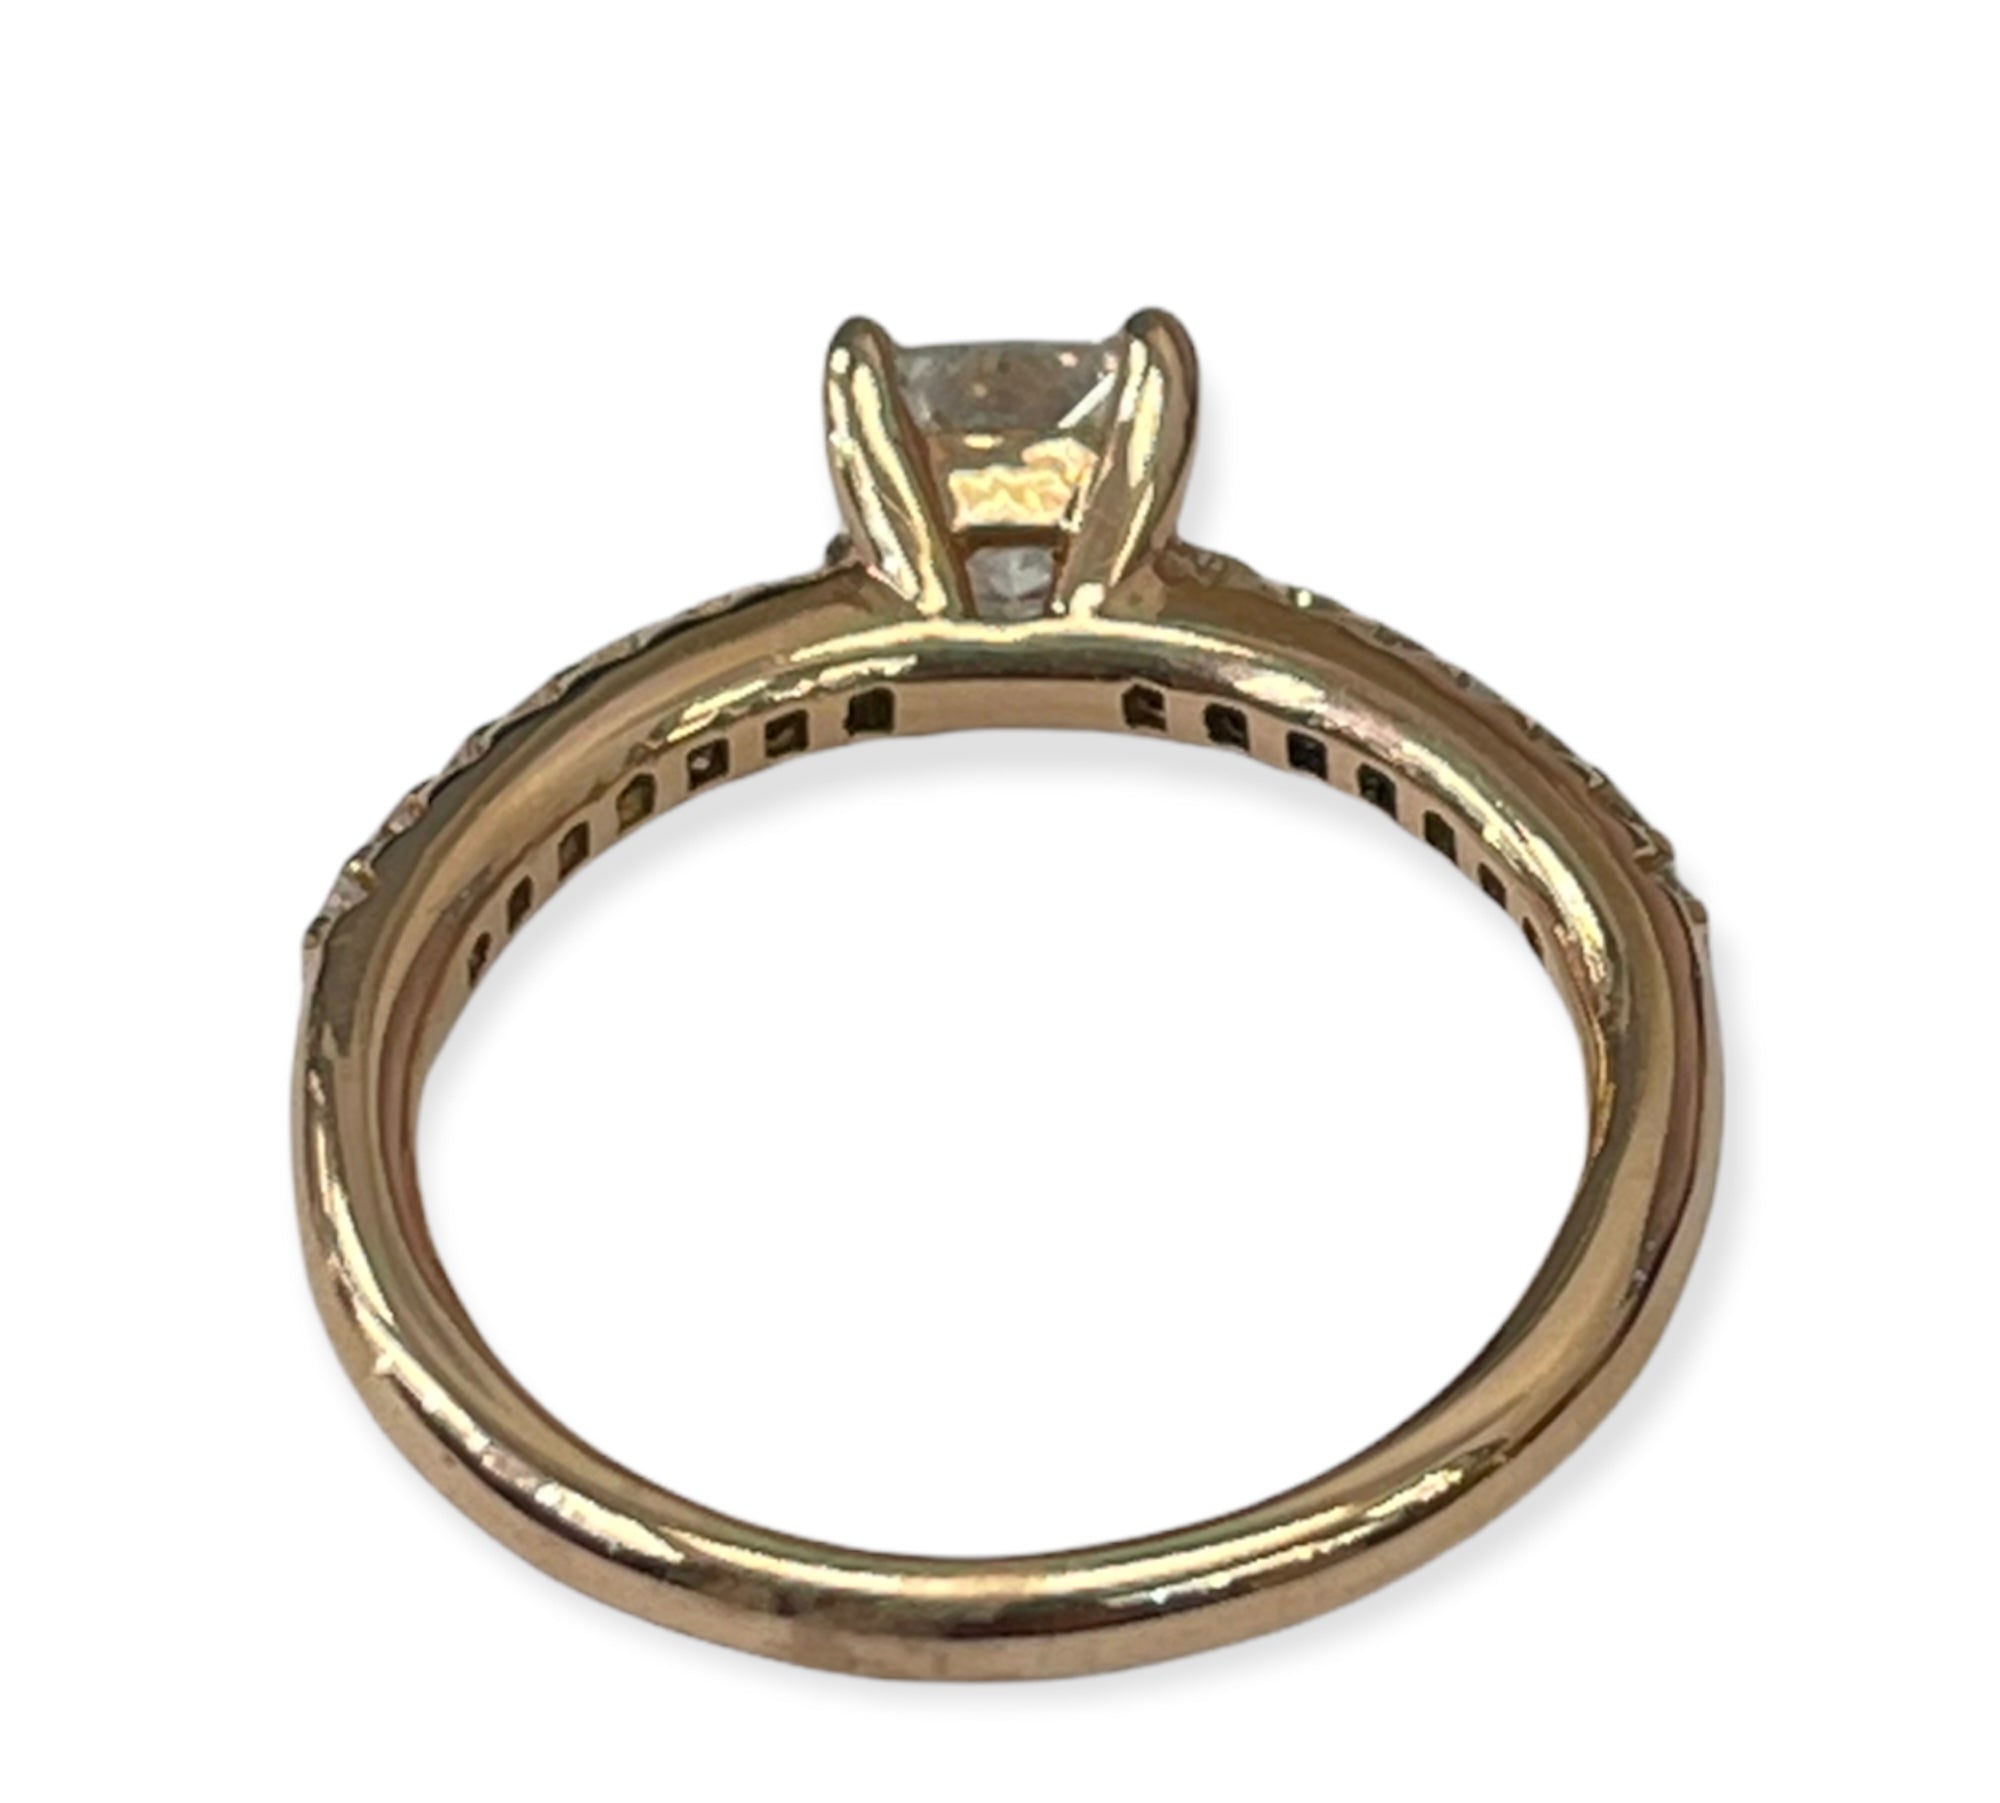 Princess Cut Diamond Solitaire Engagement Ring Rose Gold 14kt